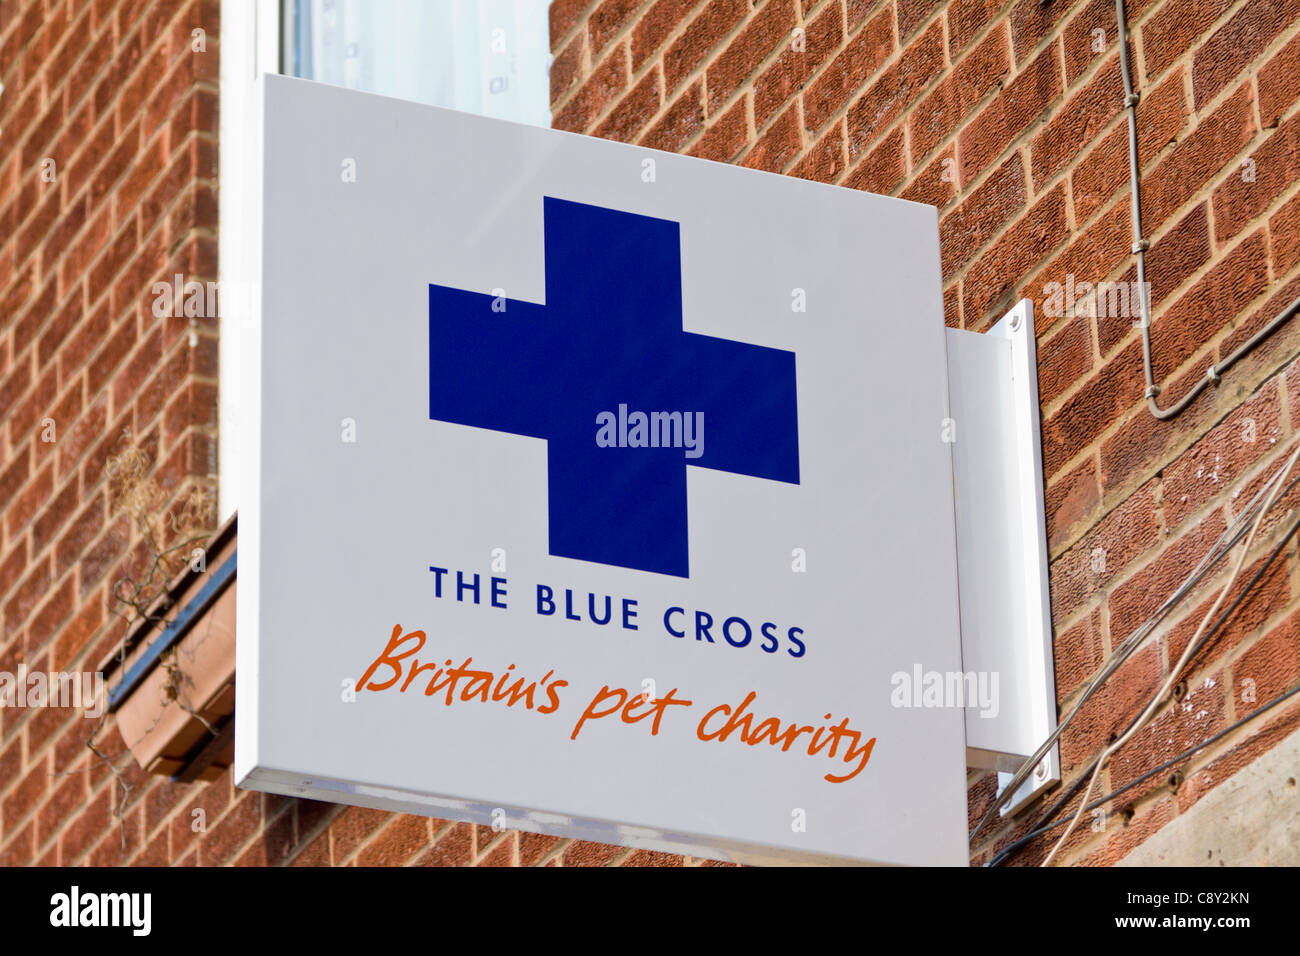 The Blue Cross pet charity sign, Ledbury Stock Photo